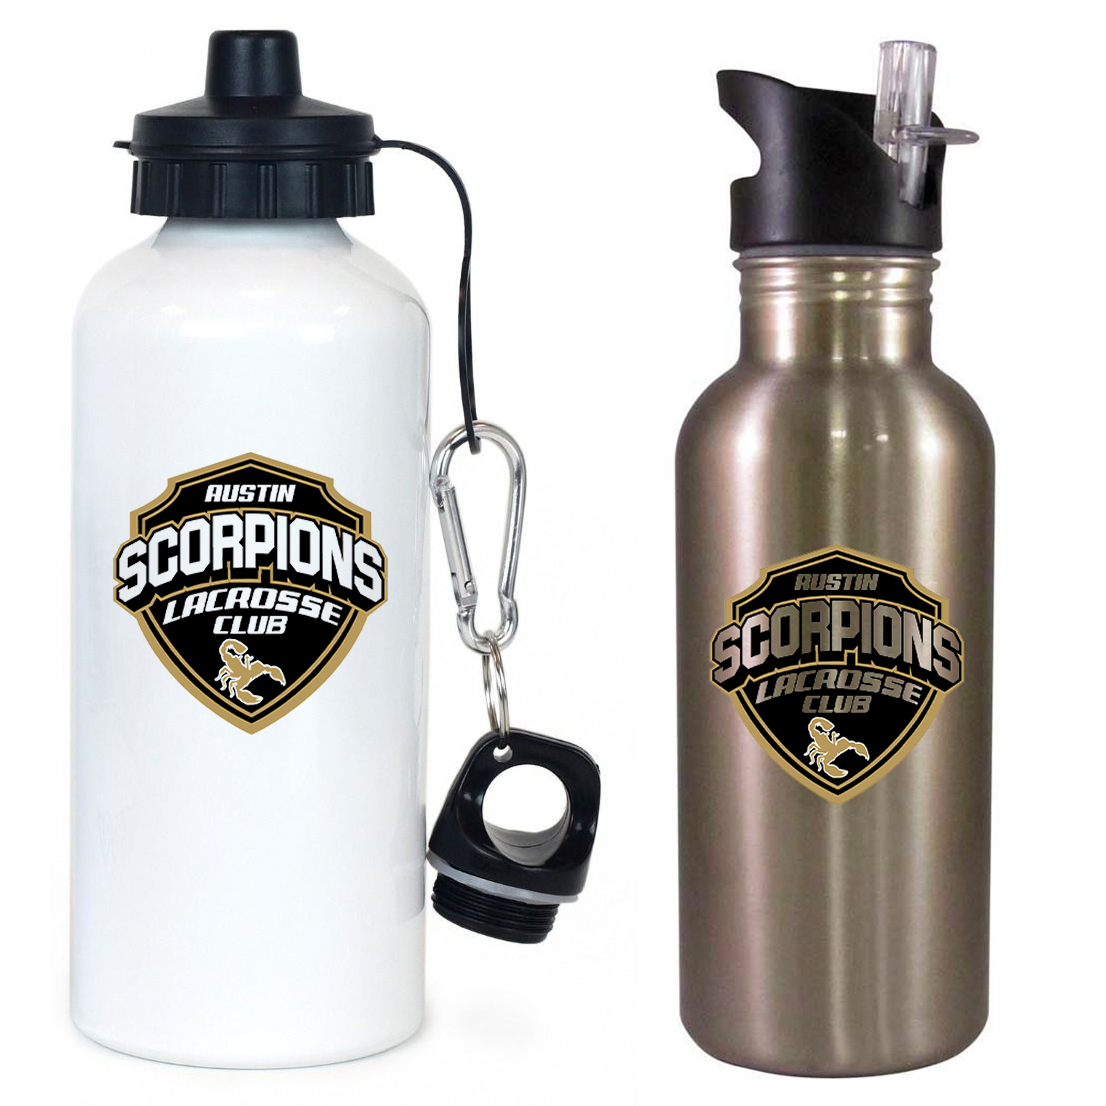 Austin Scorpions Lacrosse Club Team Water Bottle